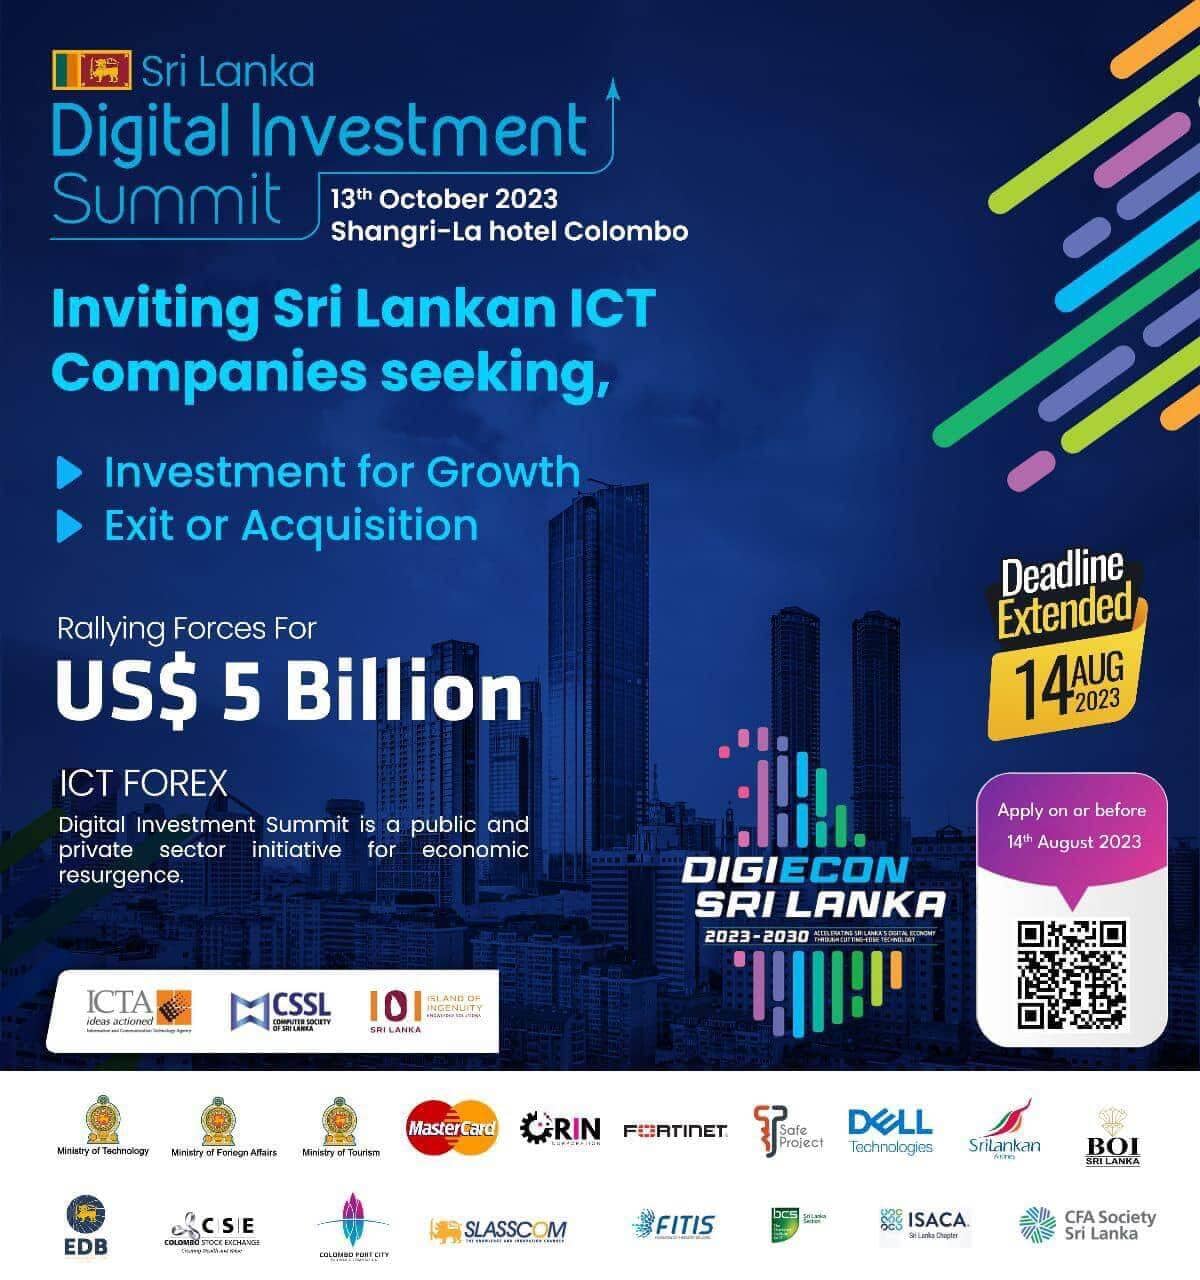 Sri Lanka Digital Investment Summit 2023